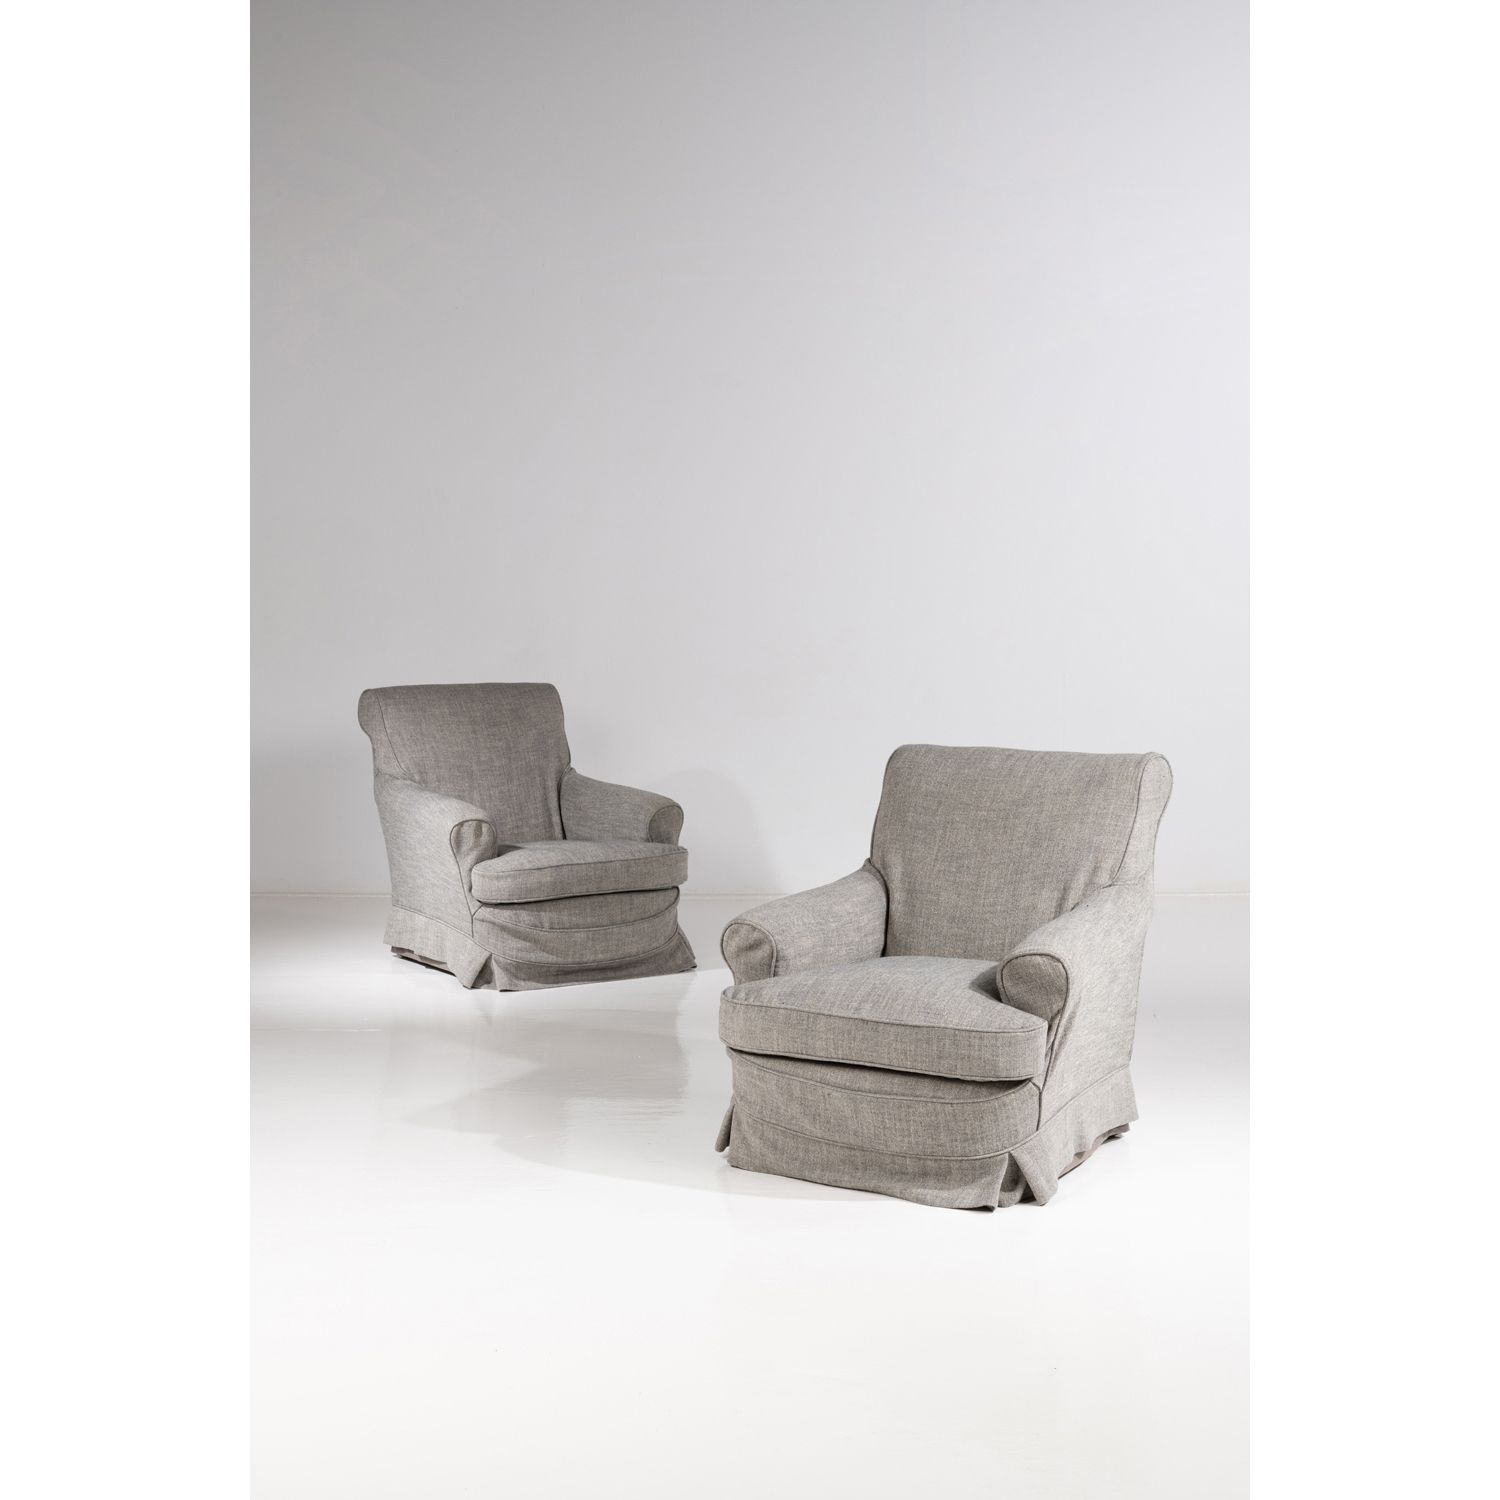 Null 现代作品（20世纪

一对扶手椅，约1980年

纺织品装潢

高87×宽75×深88厘米